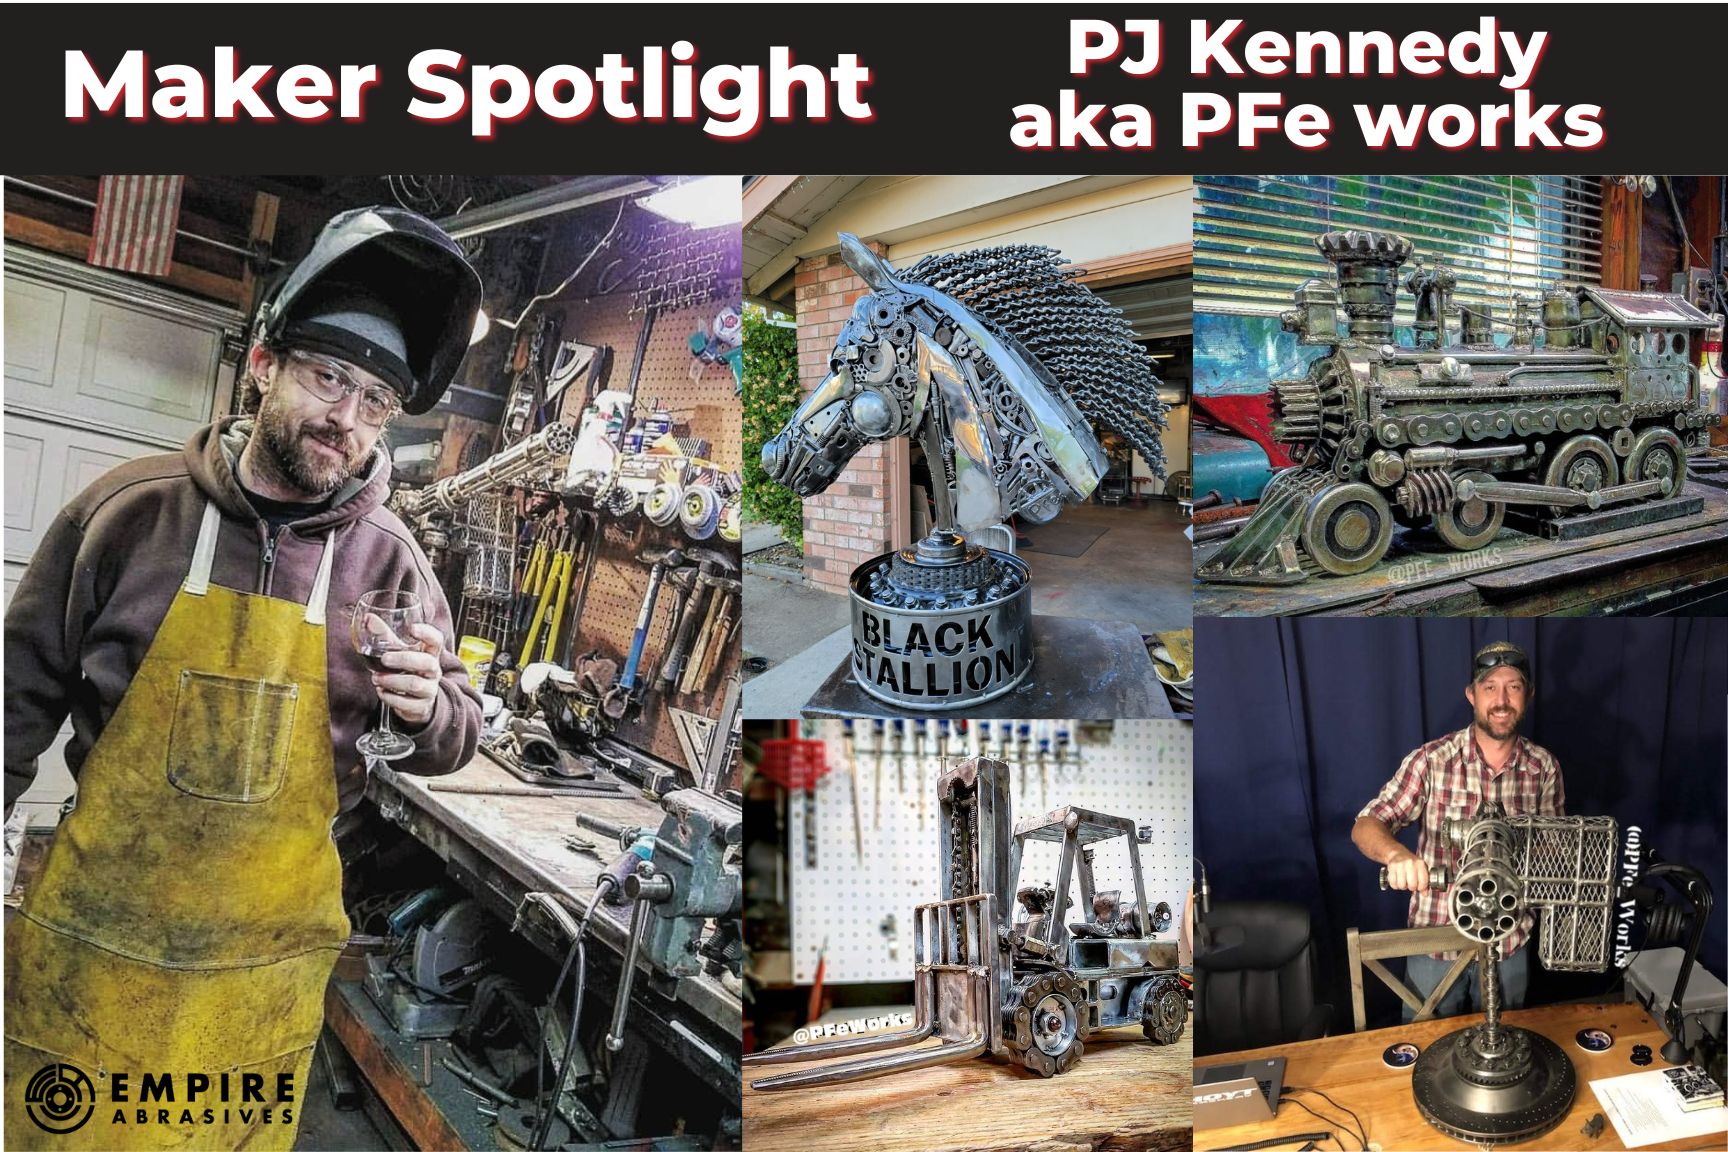 Metalworker Maker spotlight on PJ Kennedy aka PFe works who is a scrap metal artist who welds impressive metal sculptures in a steampunk style